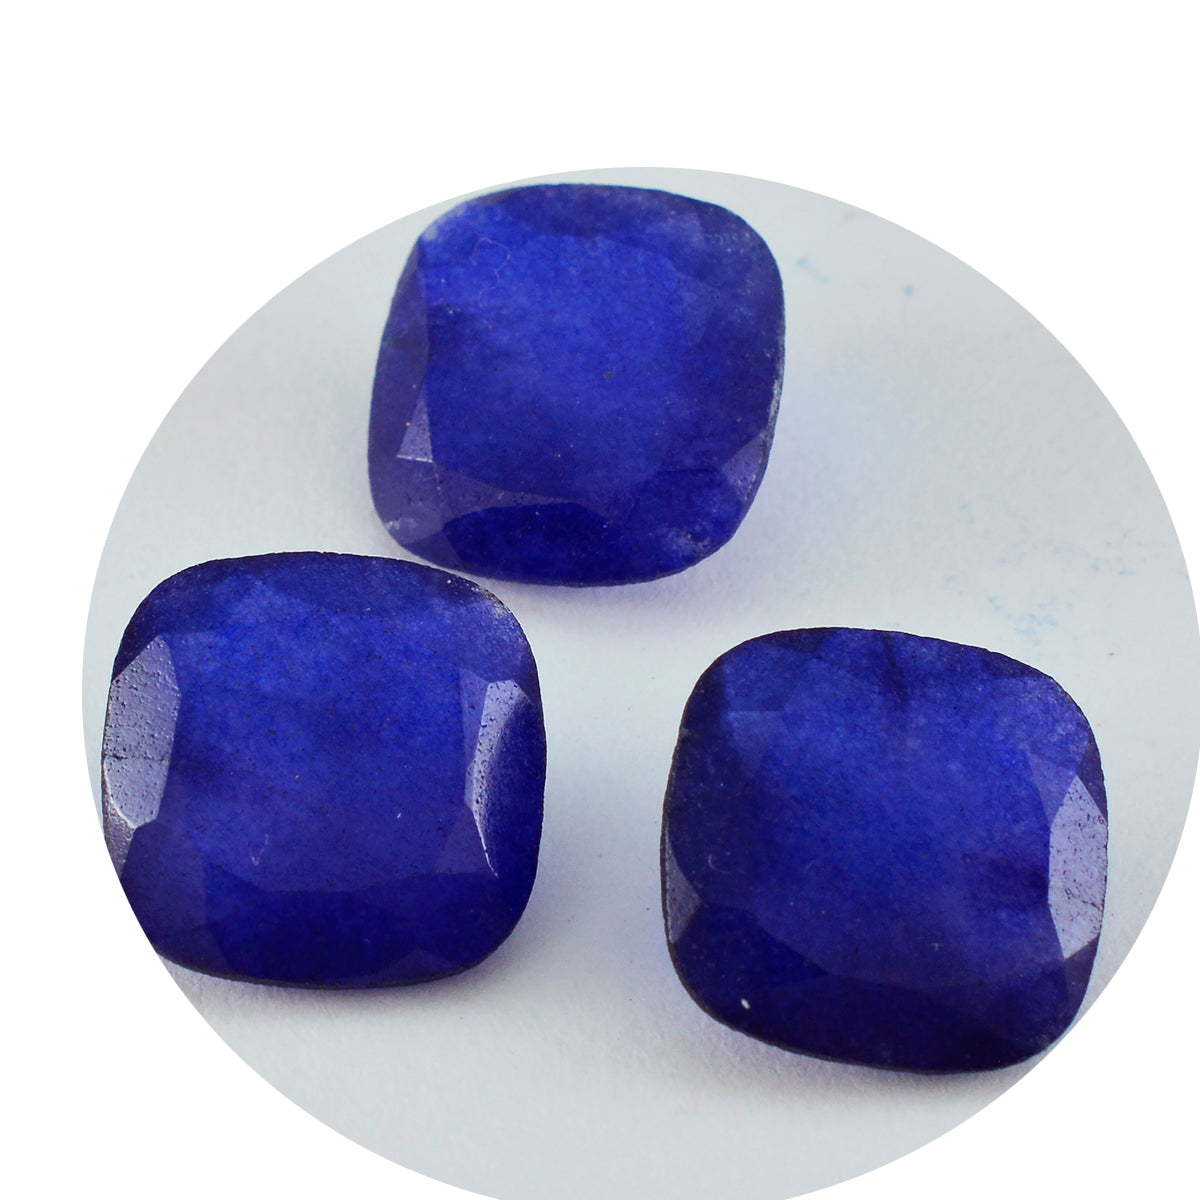 riyogems 1pc ナチュラル ブルー ジャスパー ファセット 13x13 mm クッション形状の素晴らしい品質の石